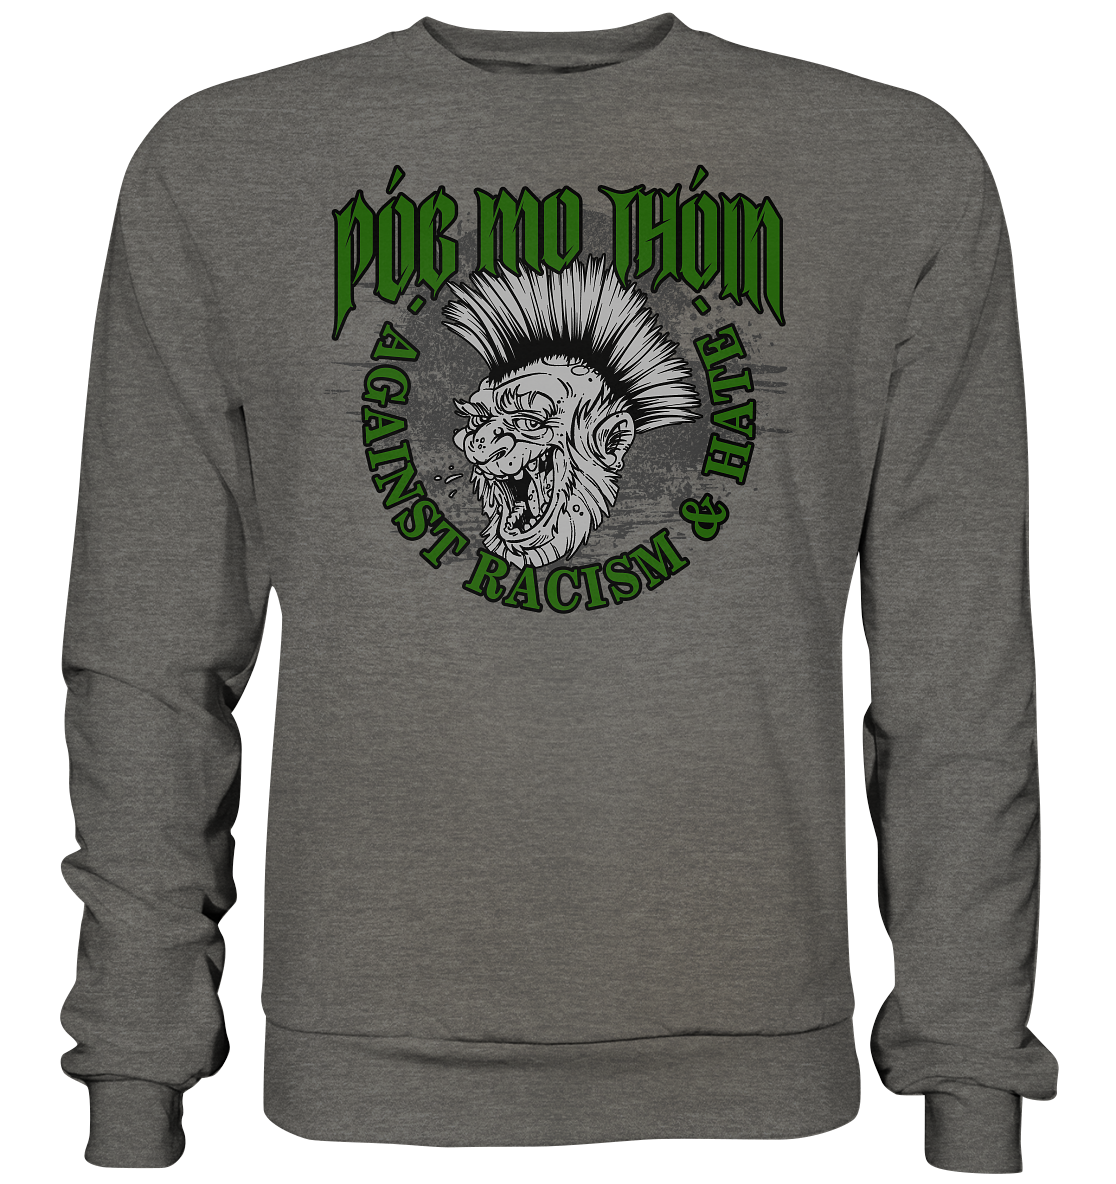 Póg Mo Thóin Streetwear "Against Racism & Hate" - Basic Sweatshirt